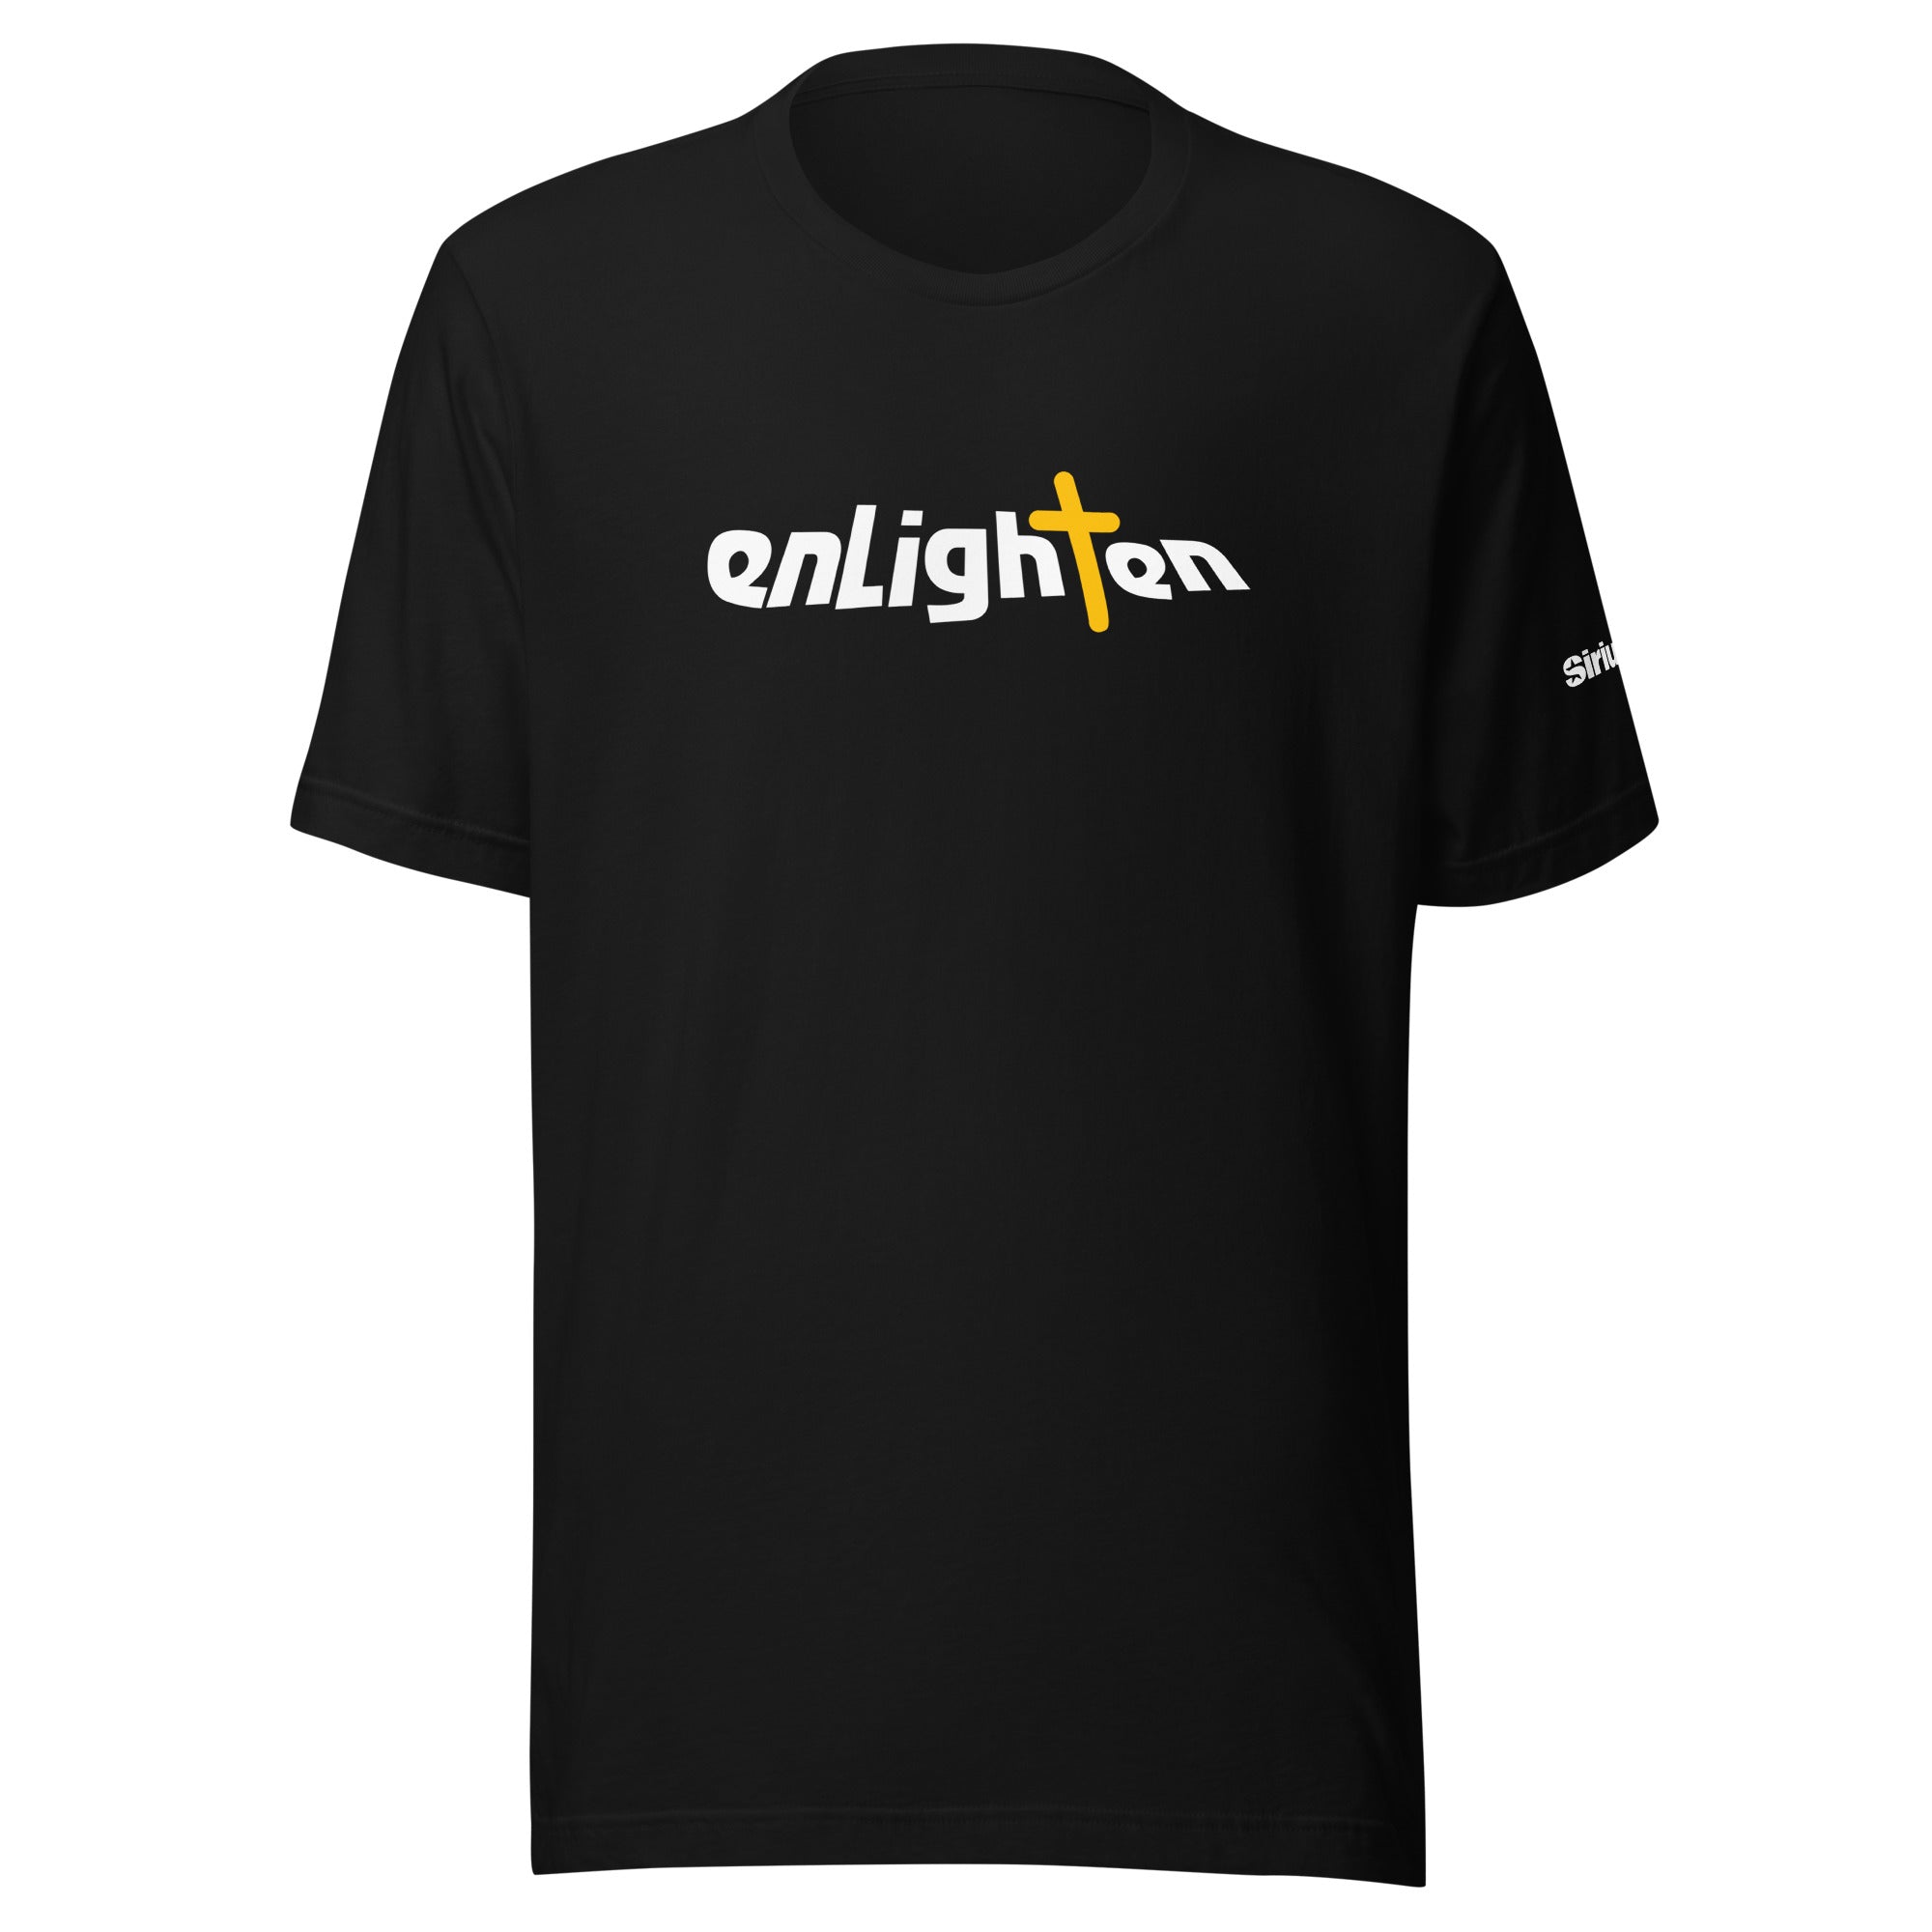 Enlighten: T-shirt (Black)